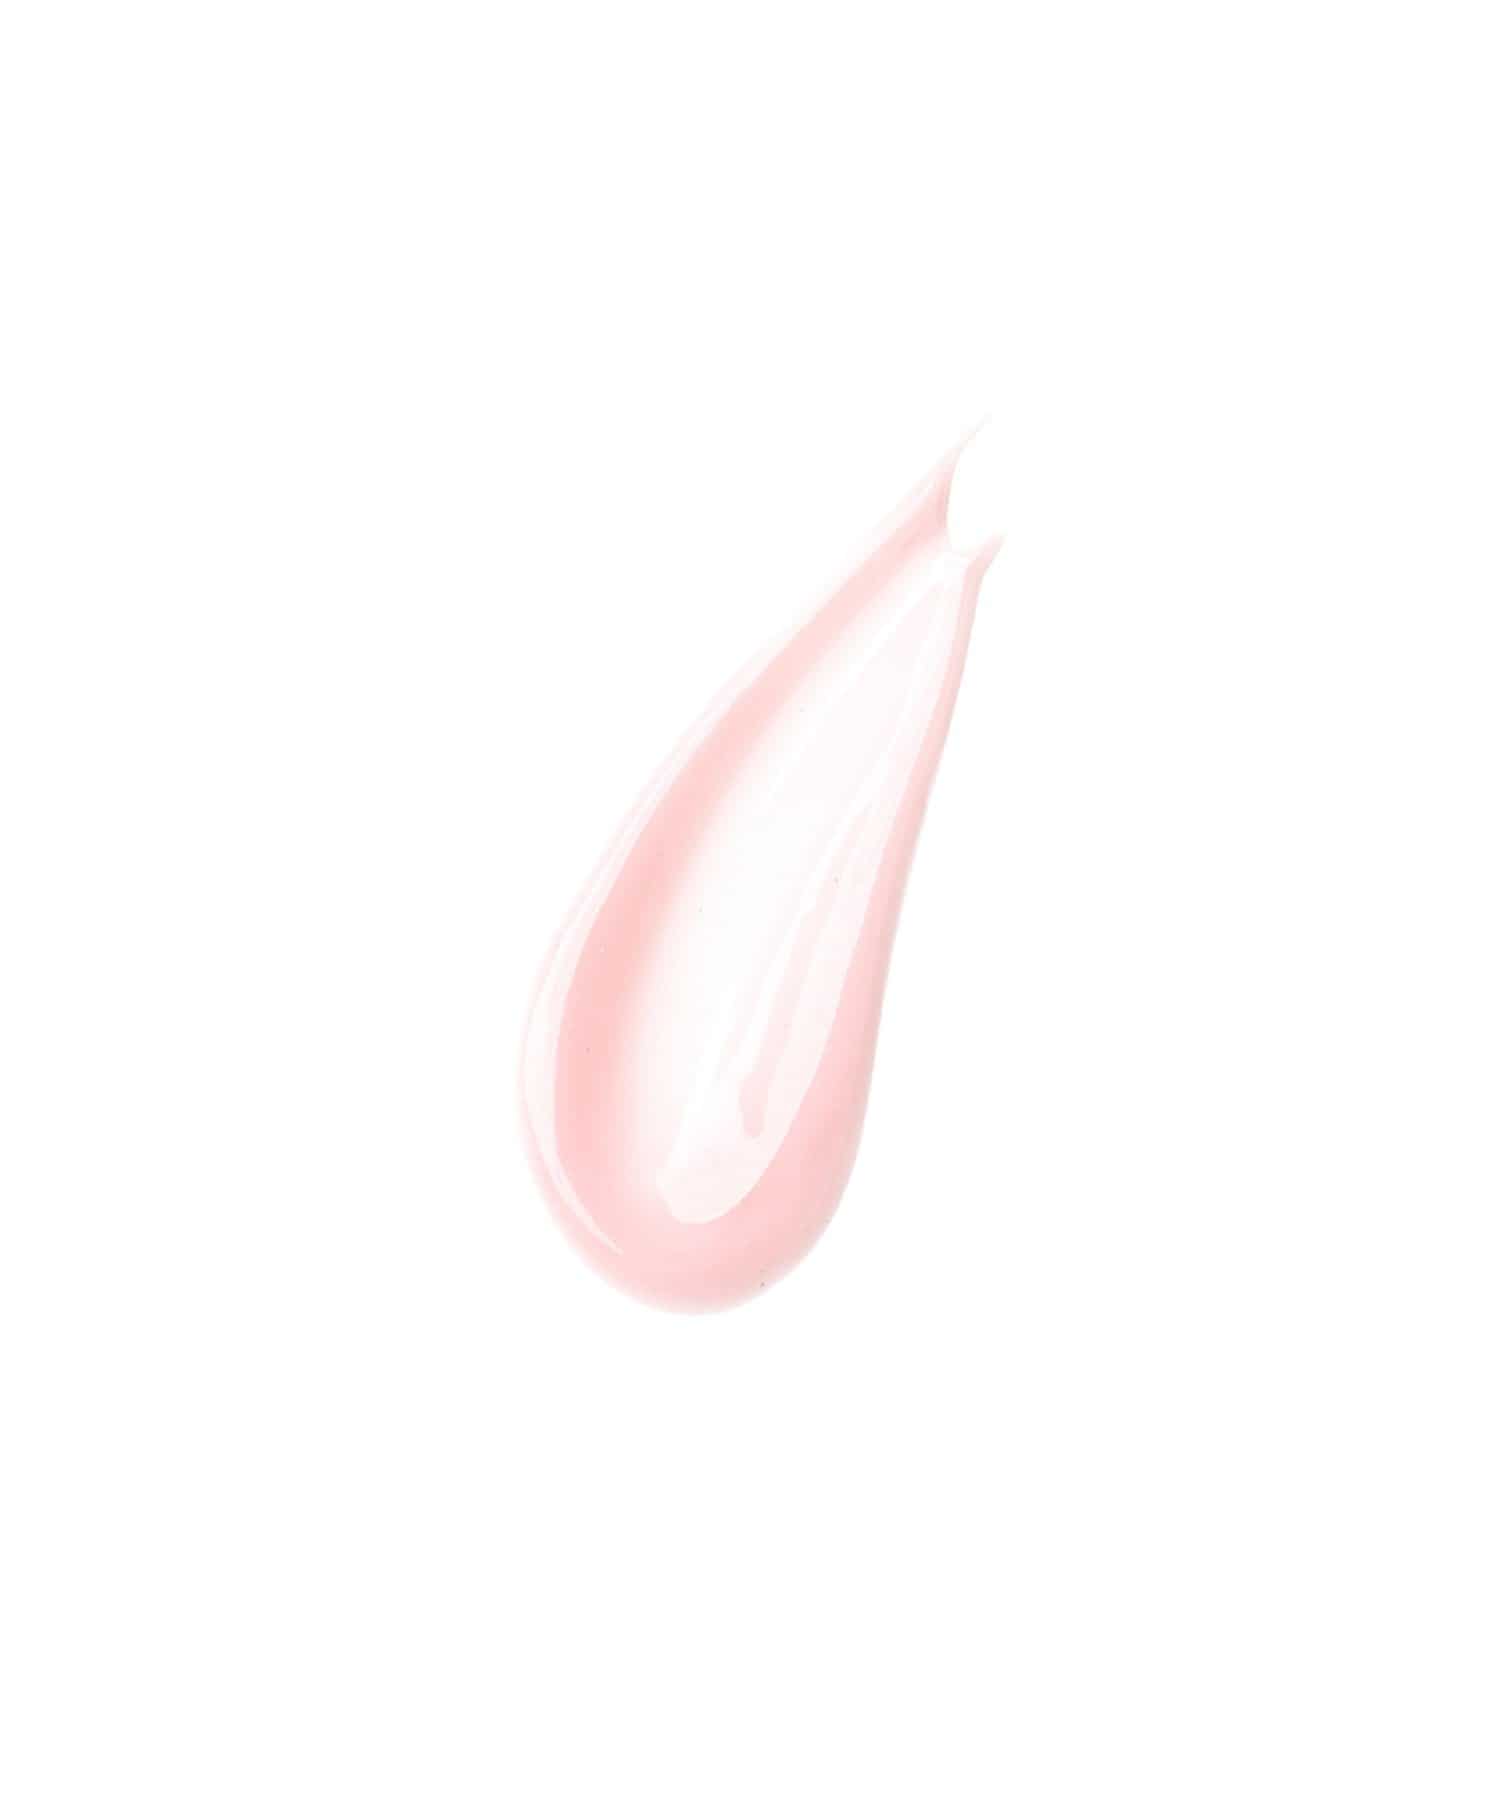 mystic(ミスティック) uneven lip balm